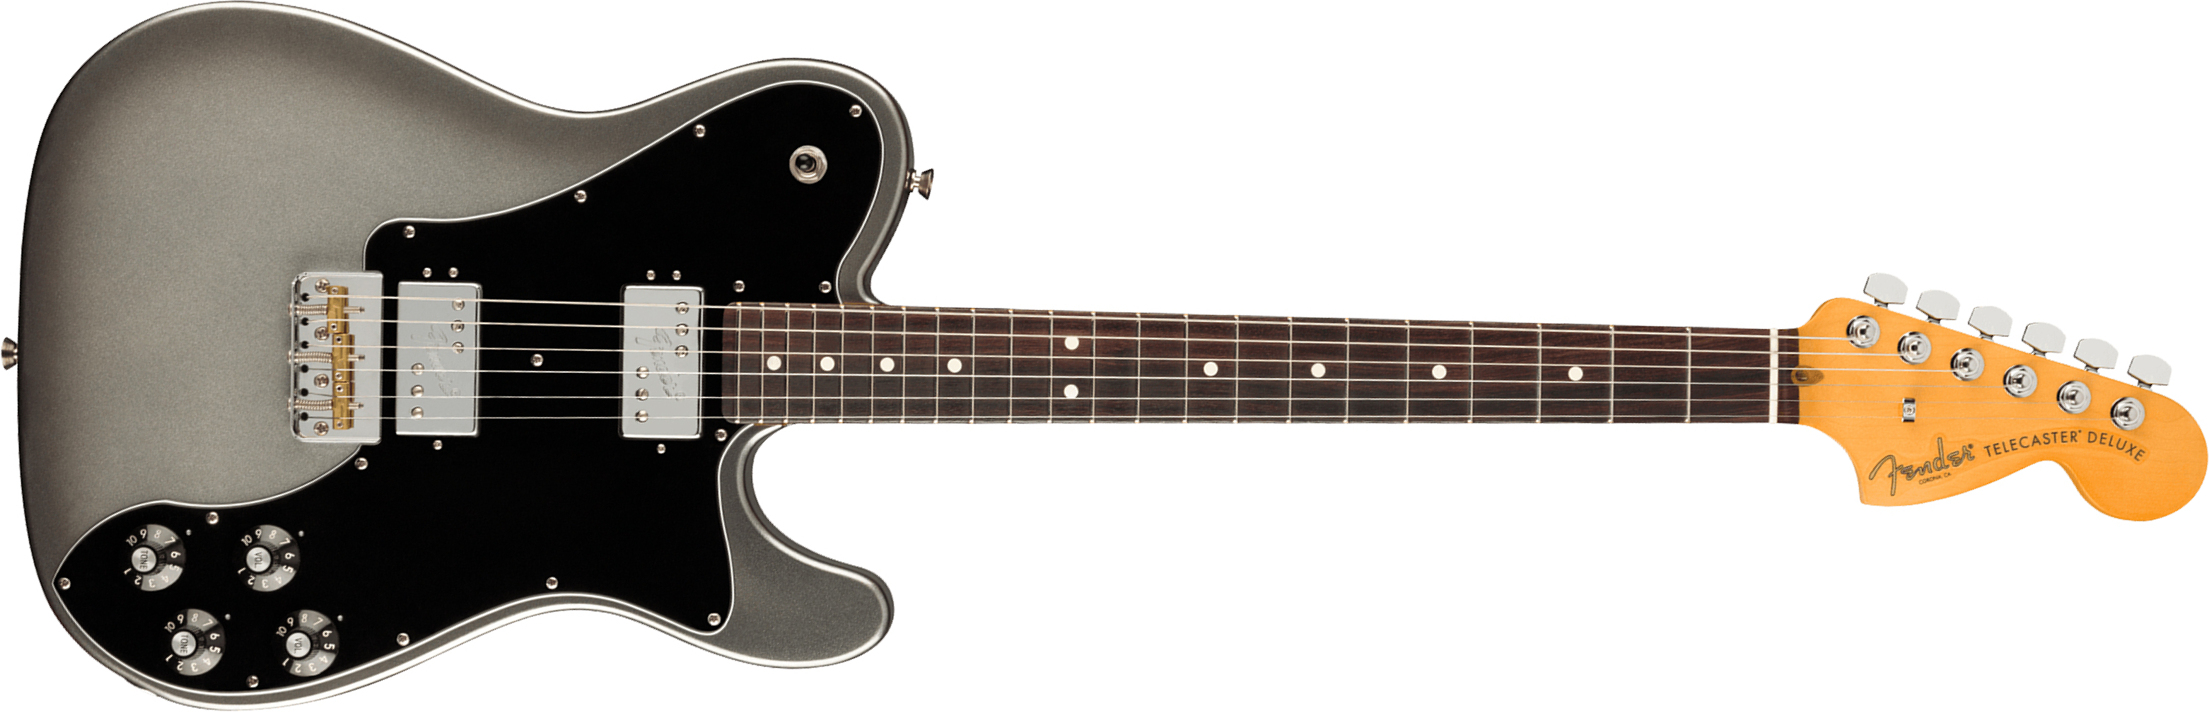 Fender Tele Deluxe American Professional Ii Usa Rw - Mercury - Tel shape electric guitar - Main picture